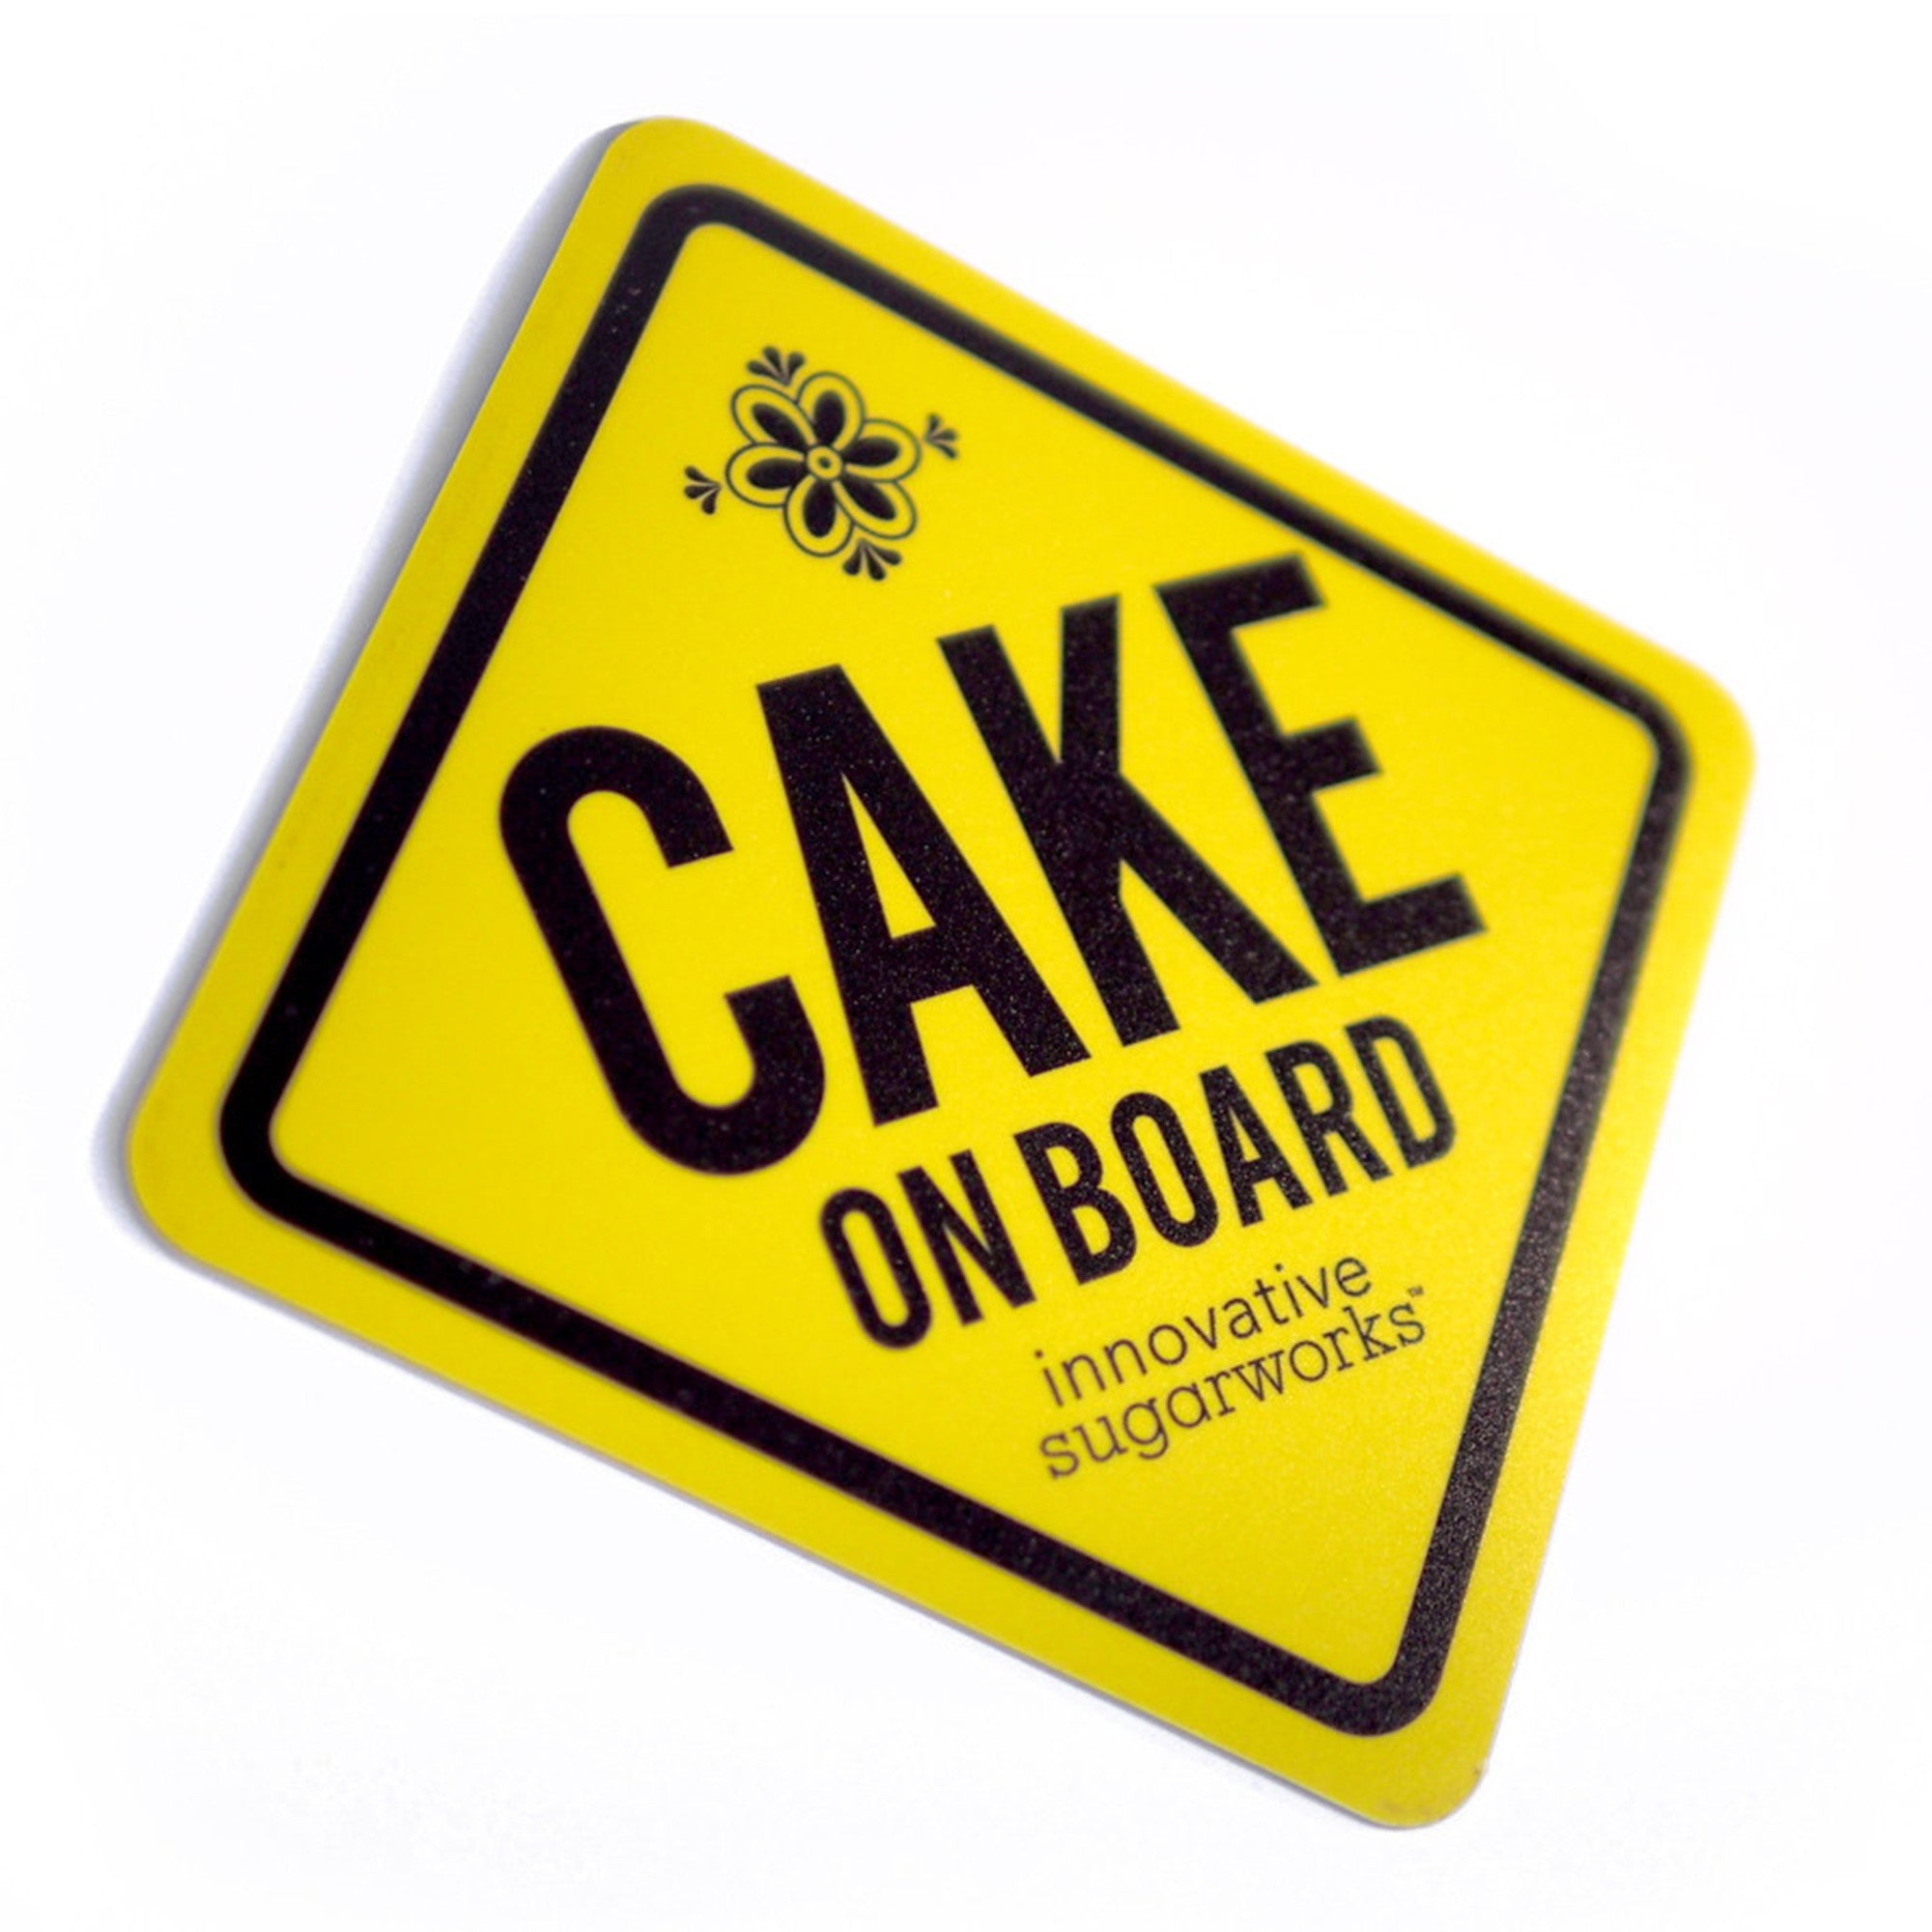 Cake On Board Magnet